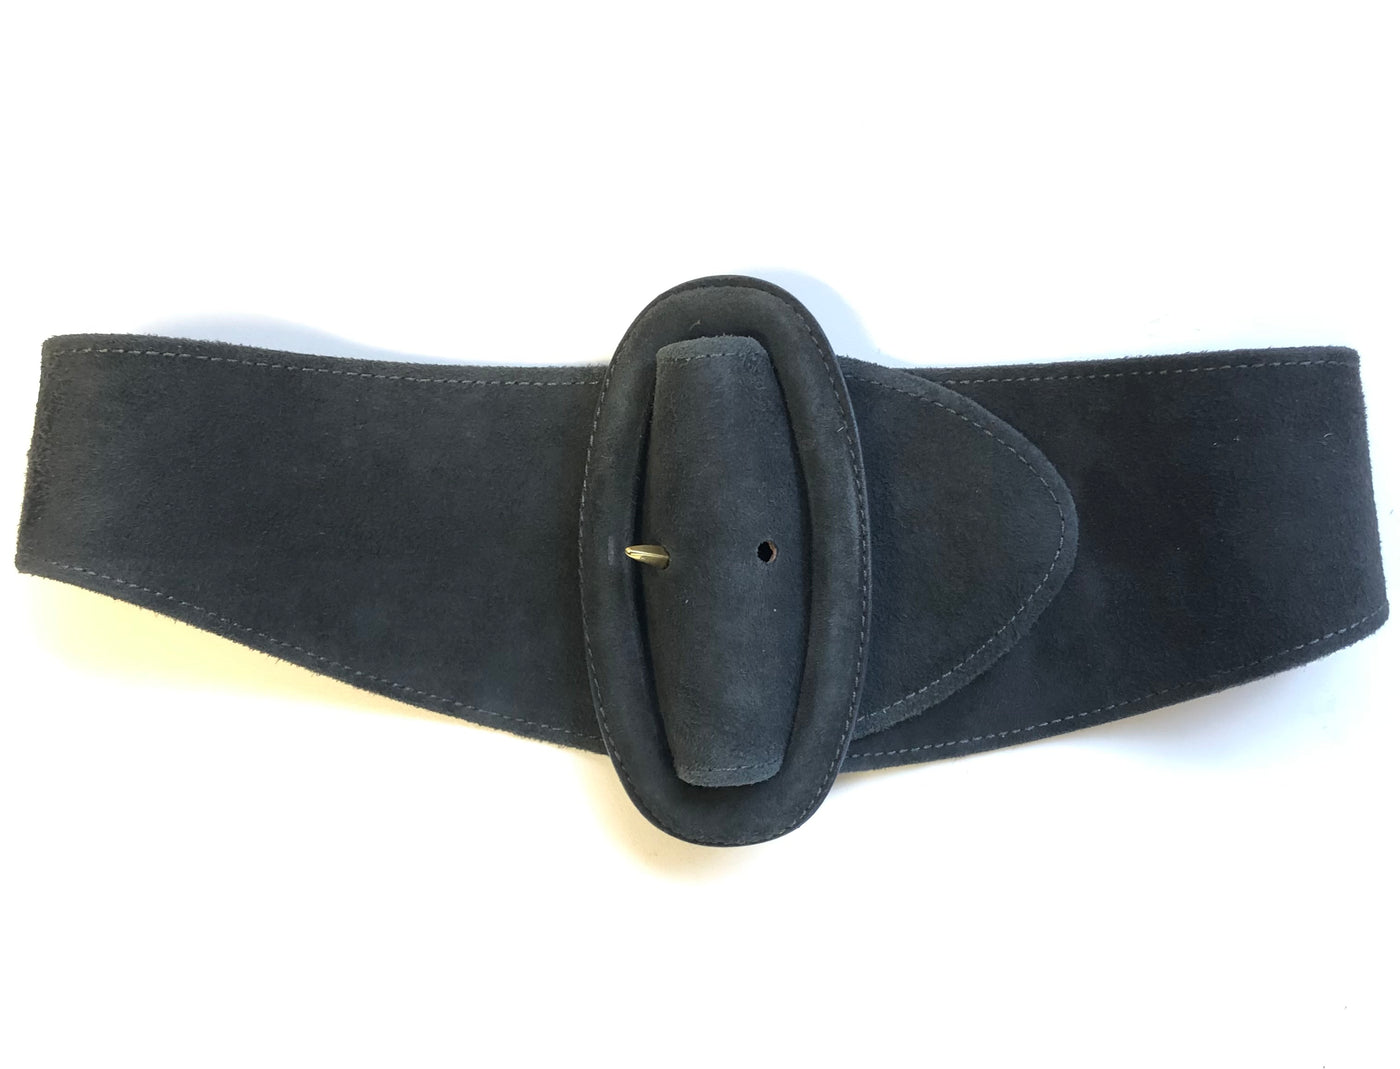 Donna Karan Soft Black Suede Leather Belt With Oval Buckle